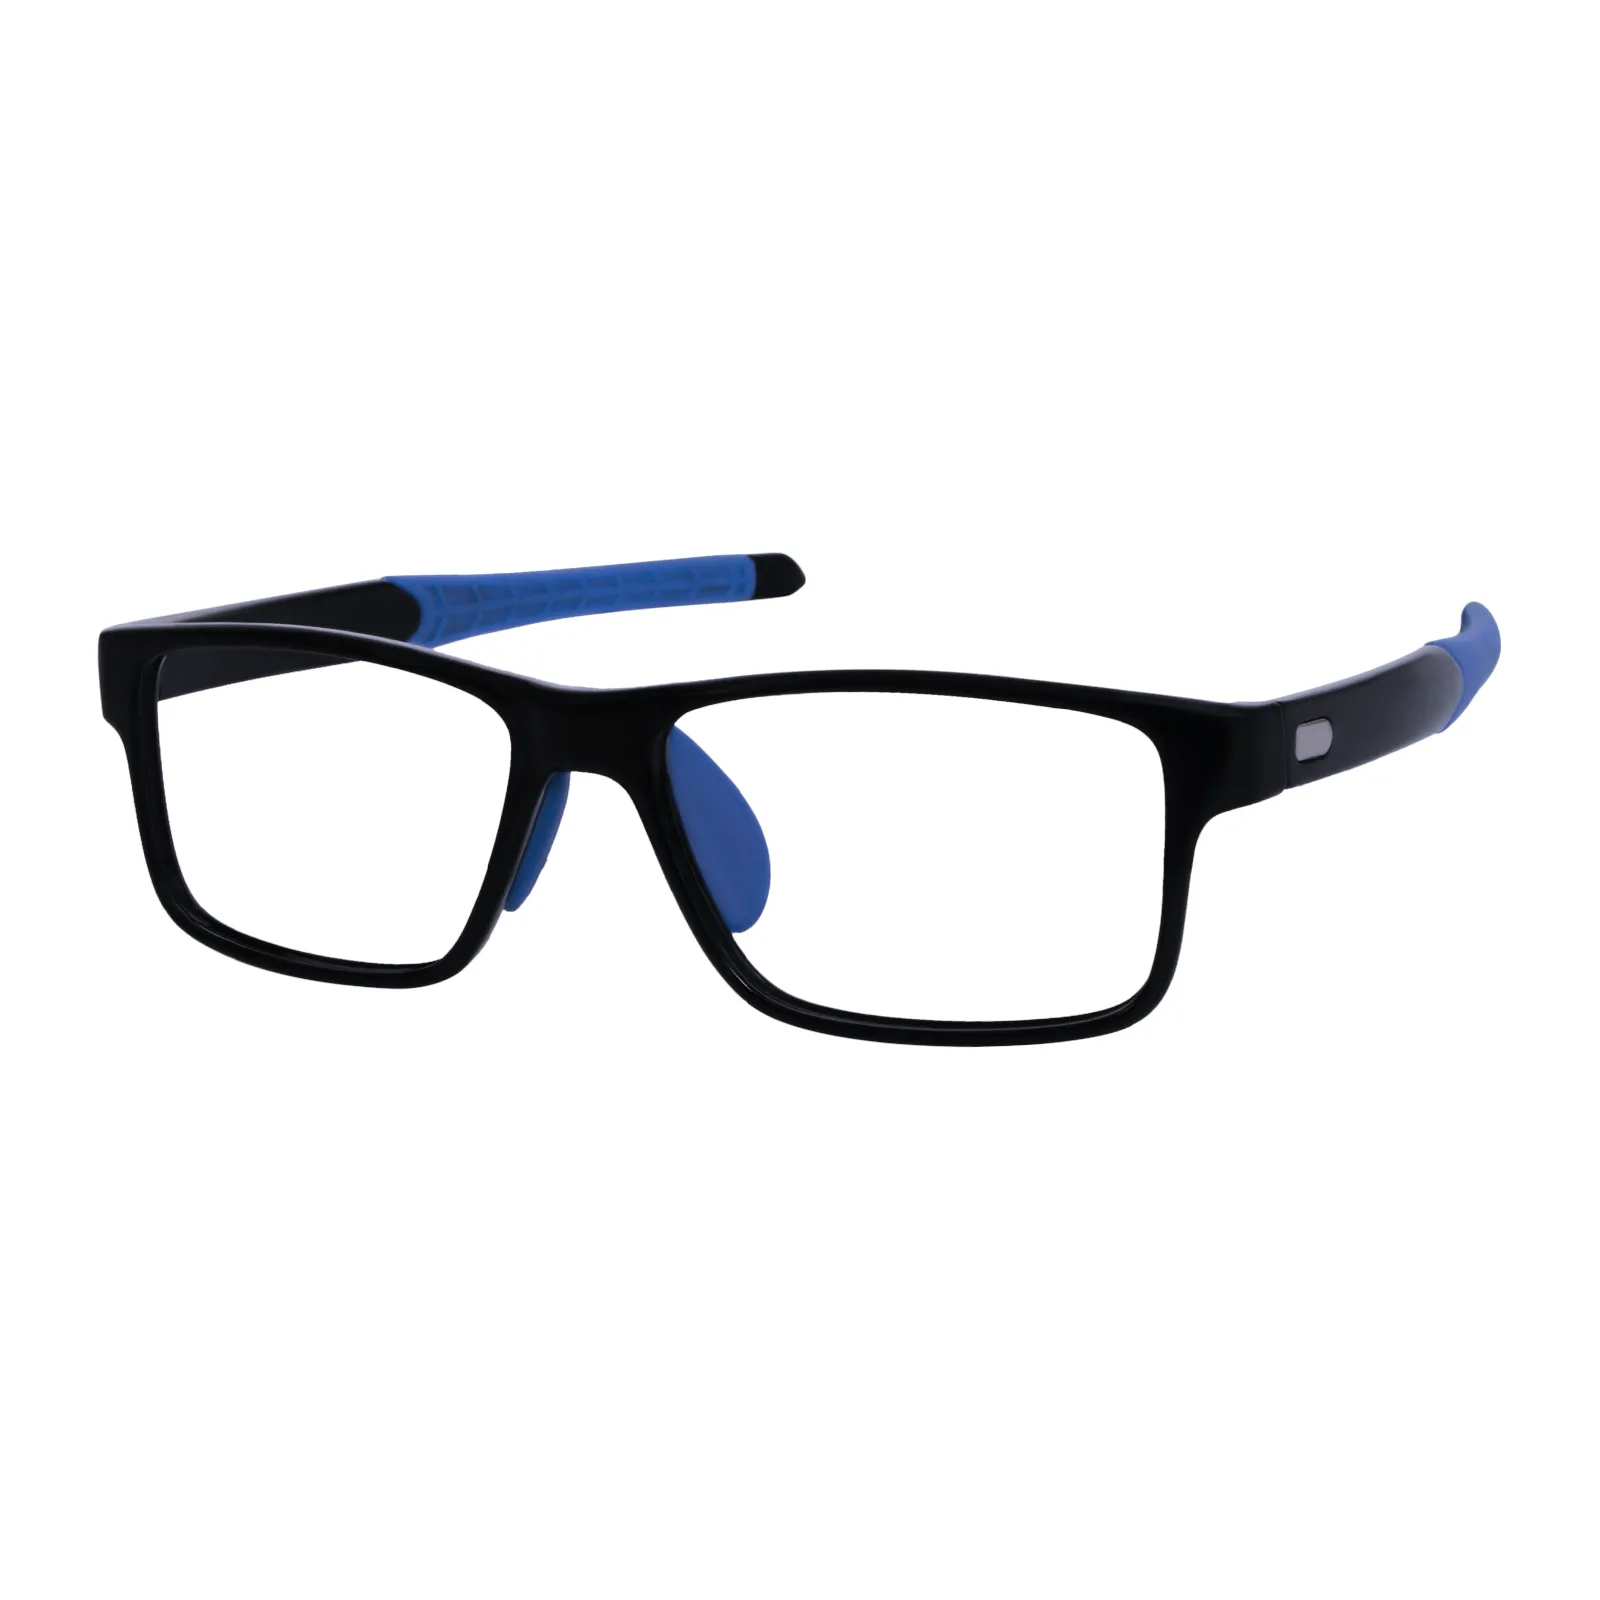 Anthony - Rectangle Black/Deep Blue Glasses for Men